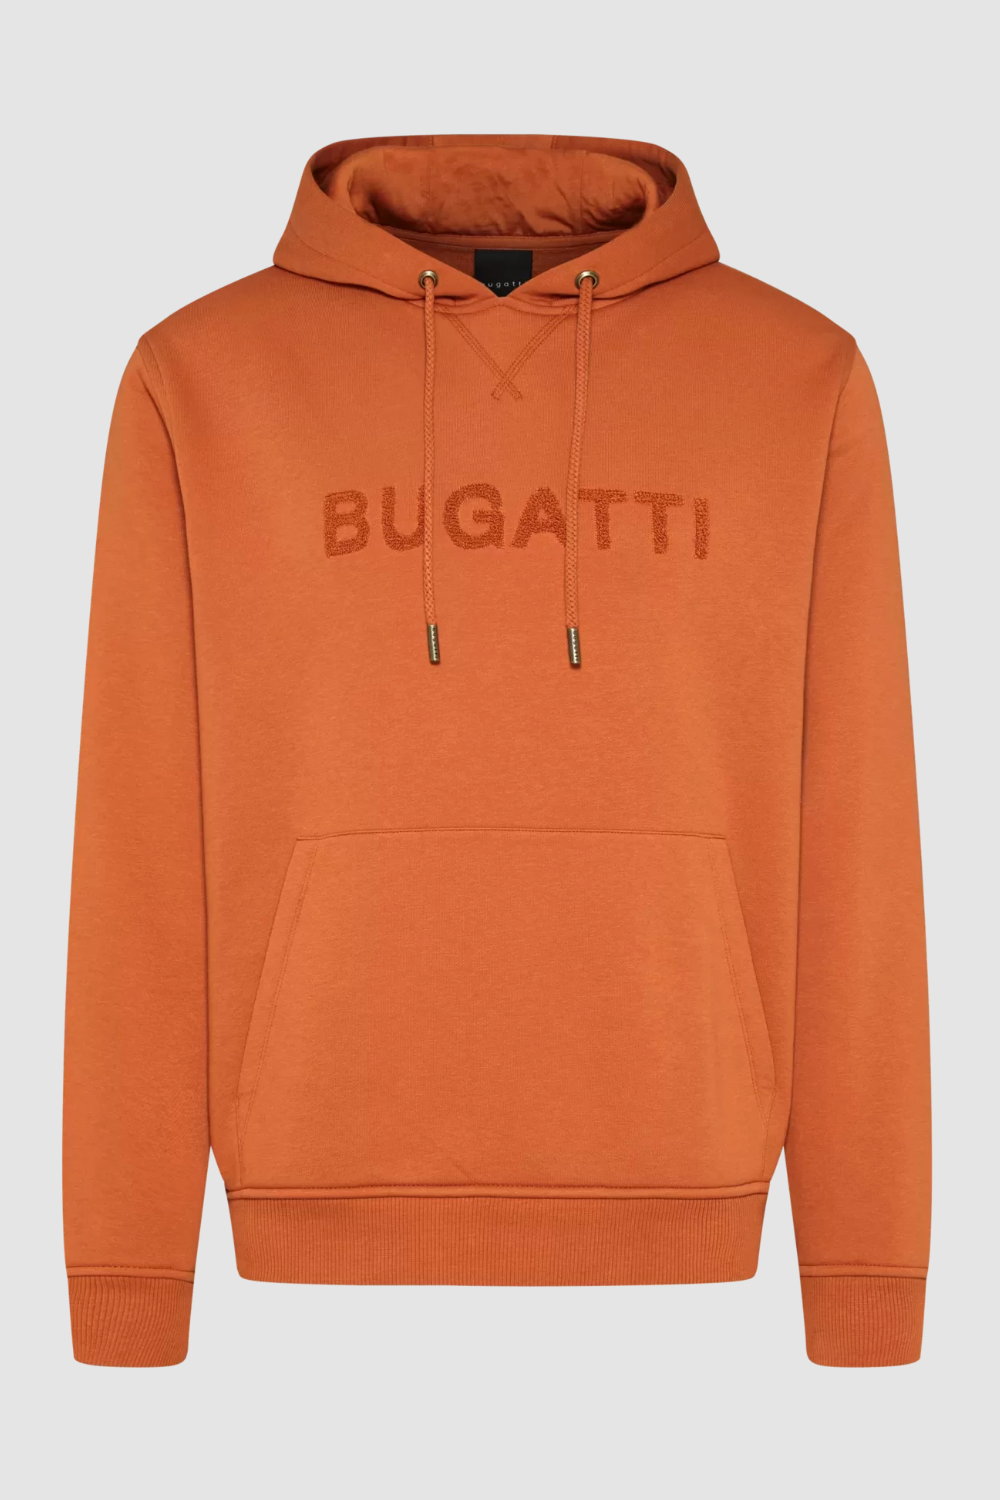 Bugatti hoodie in – orange chrisjameskingston